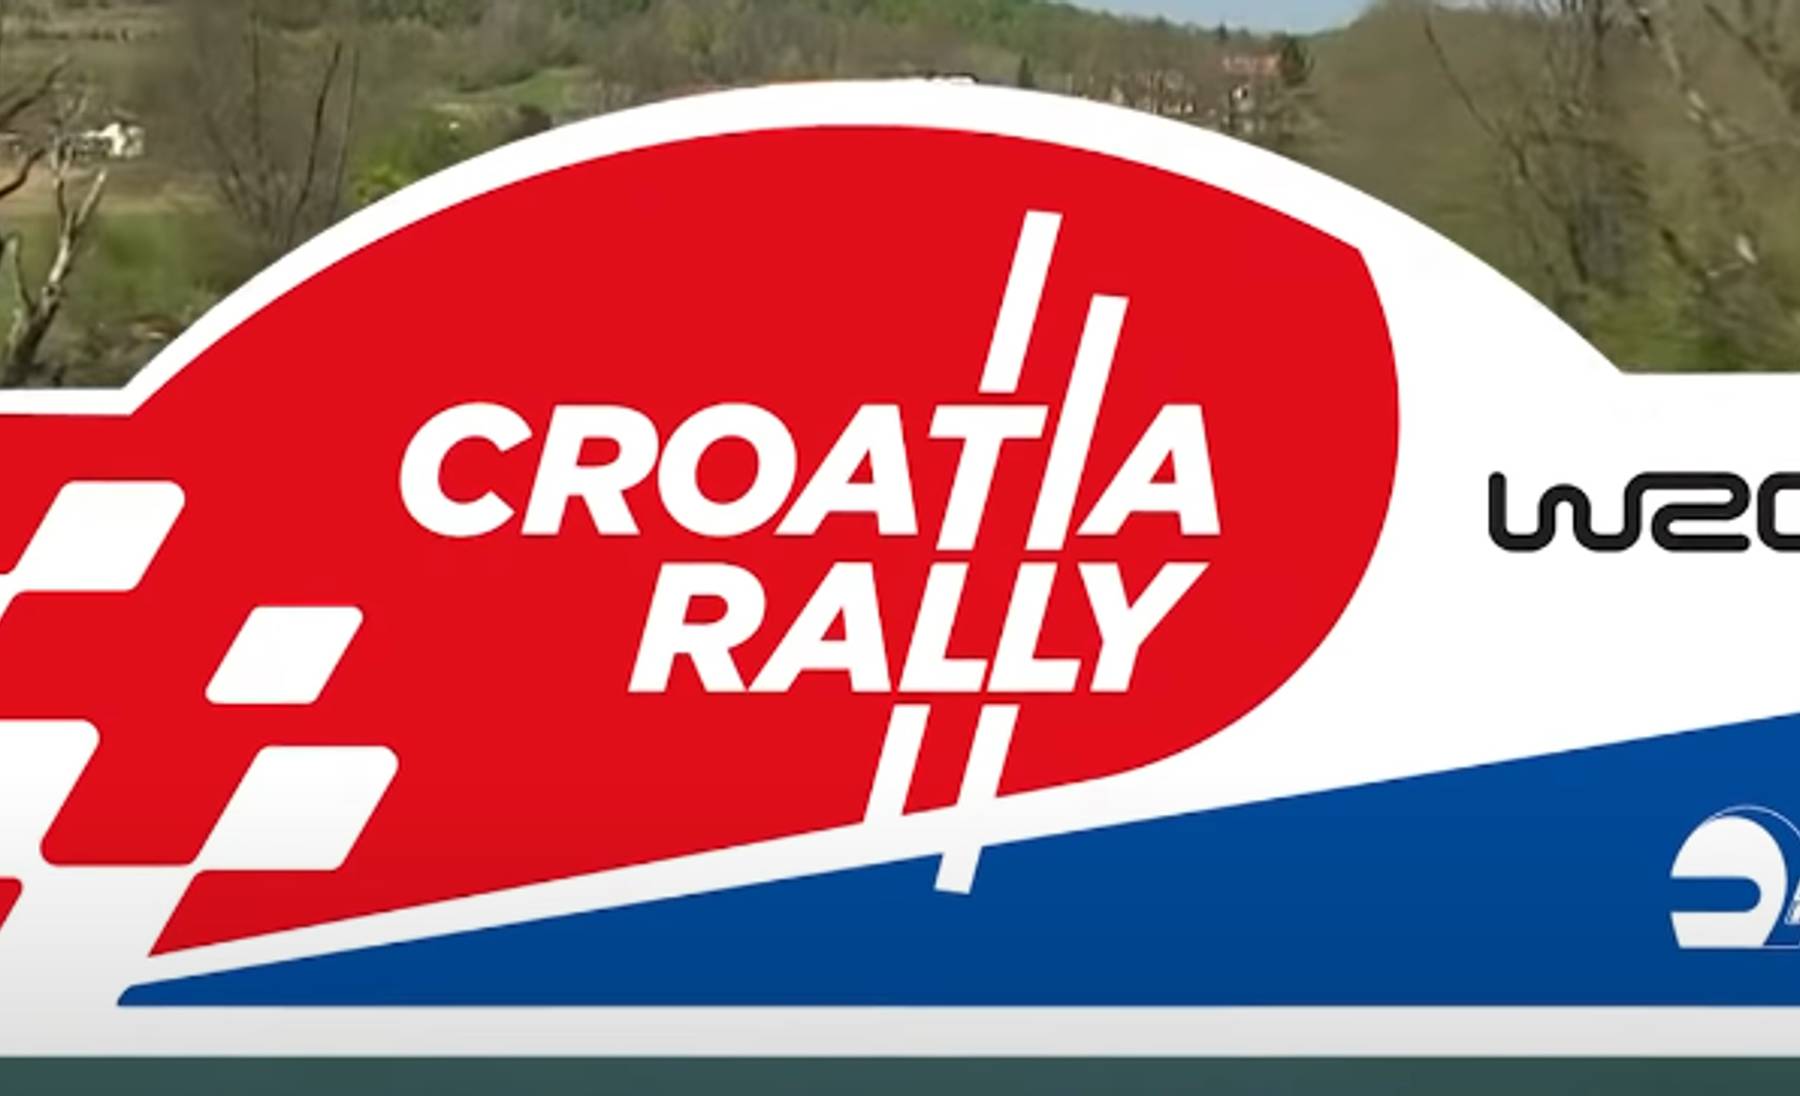 Horvaatia ralli logo